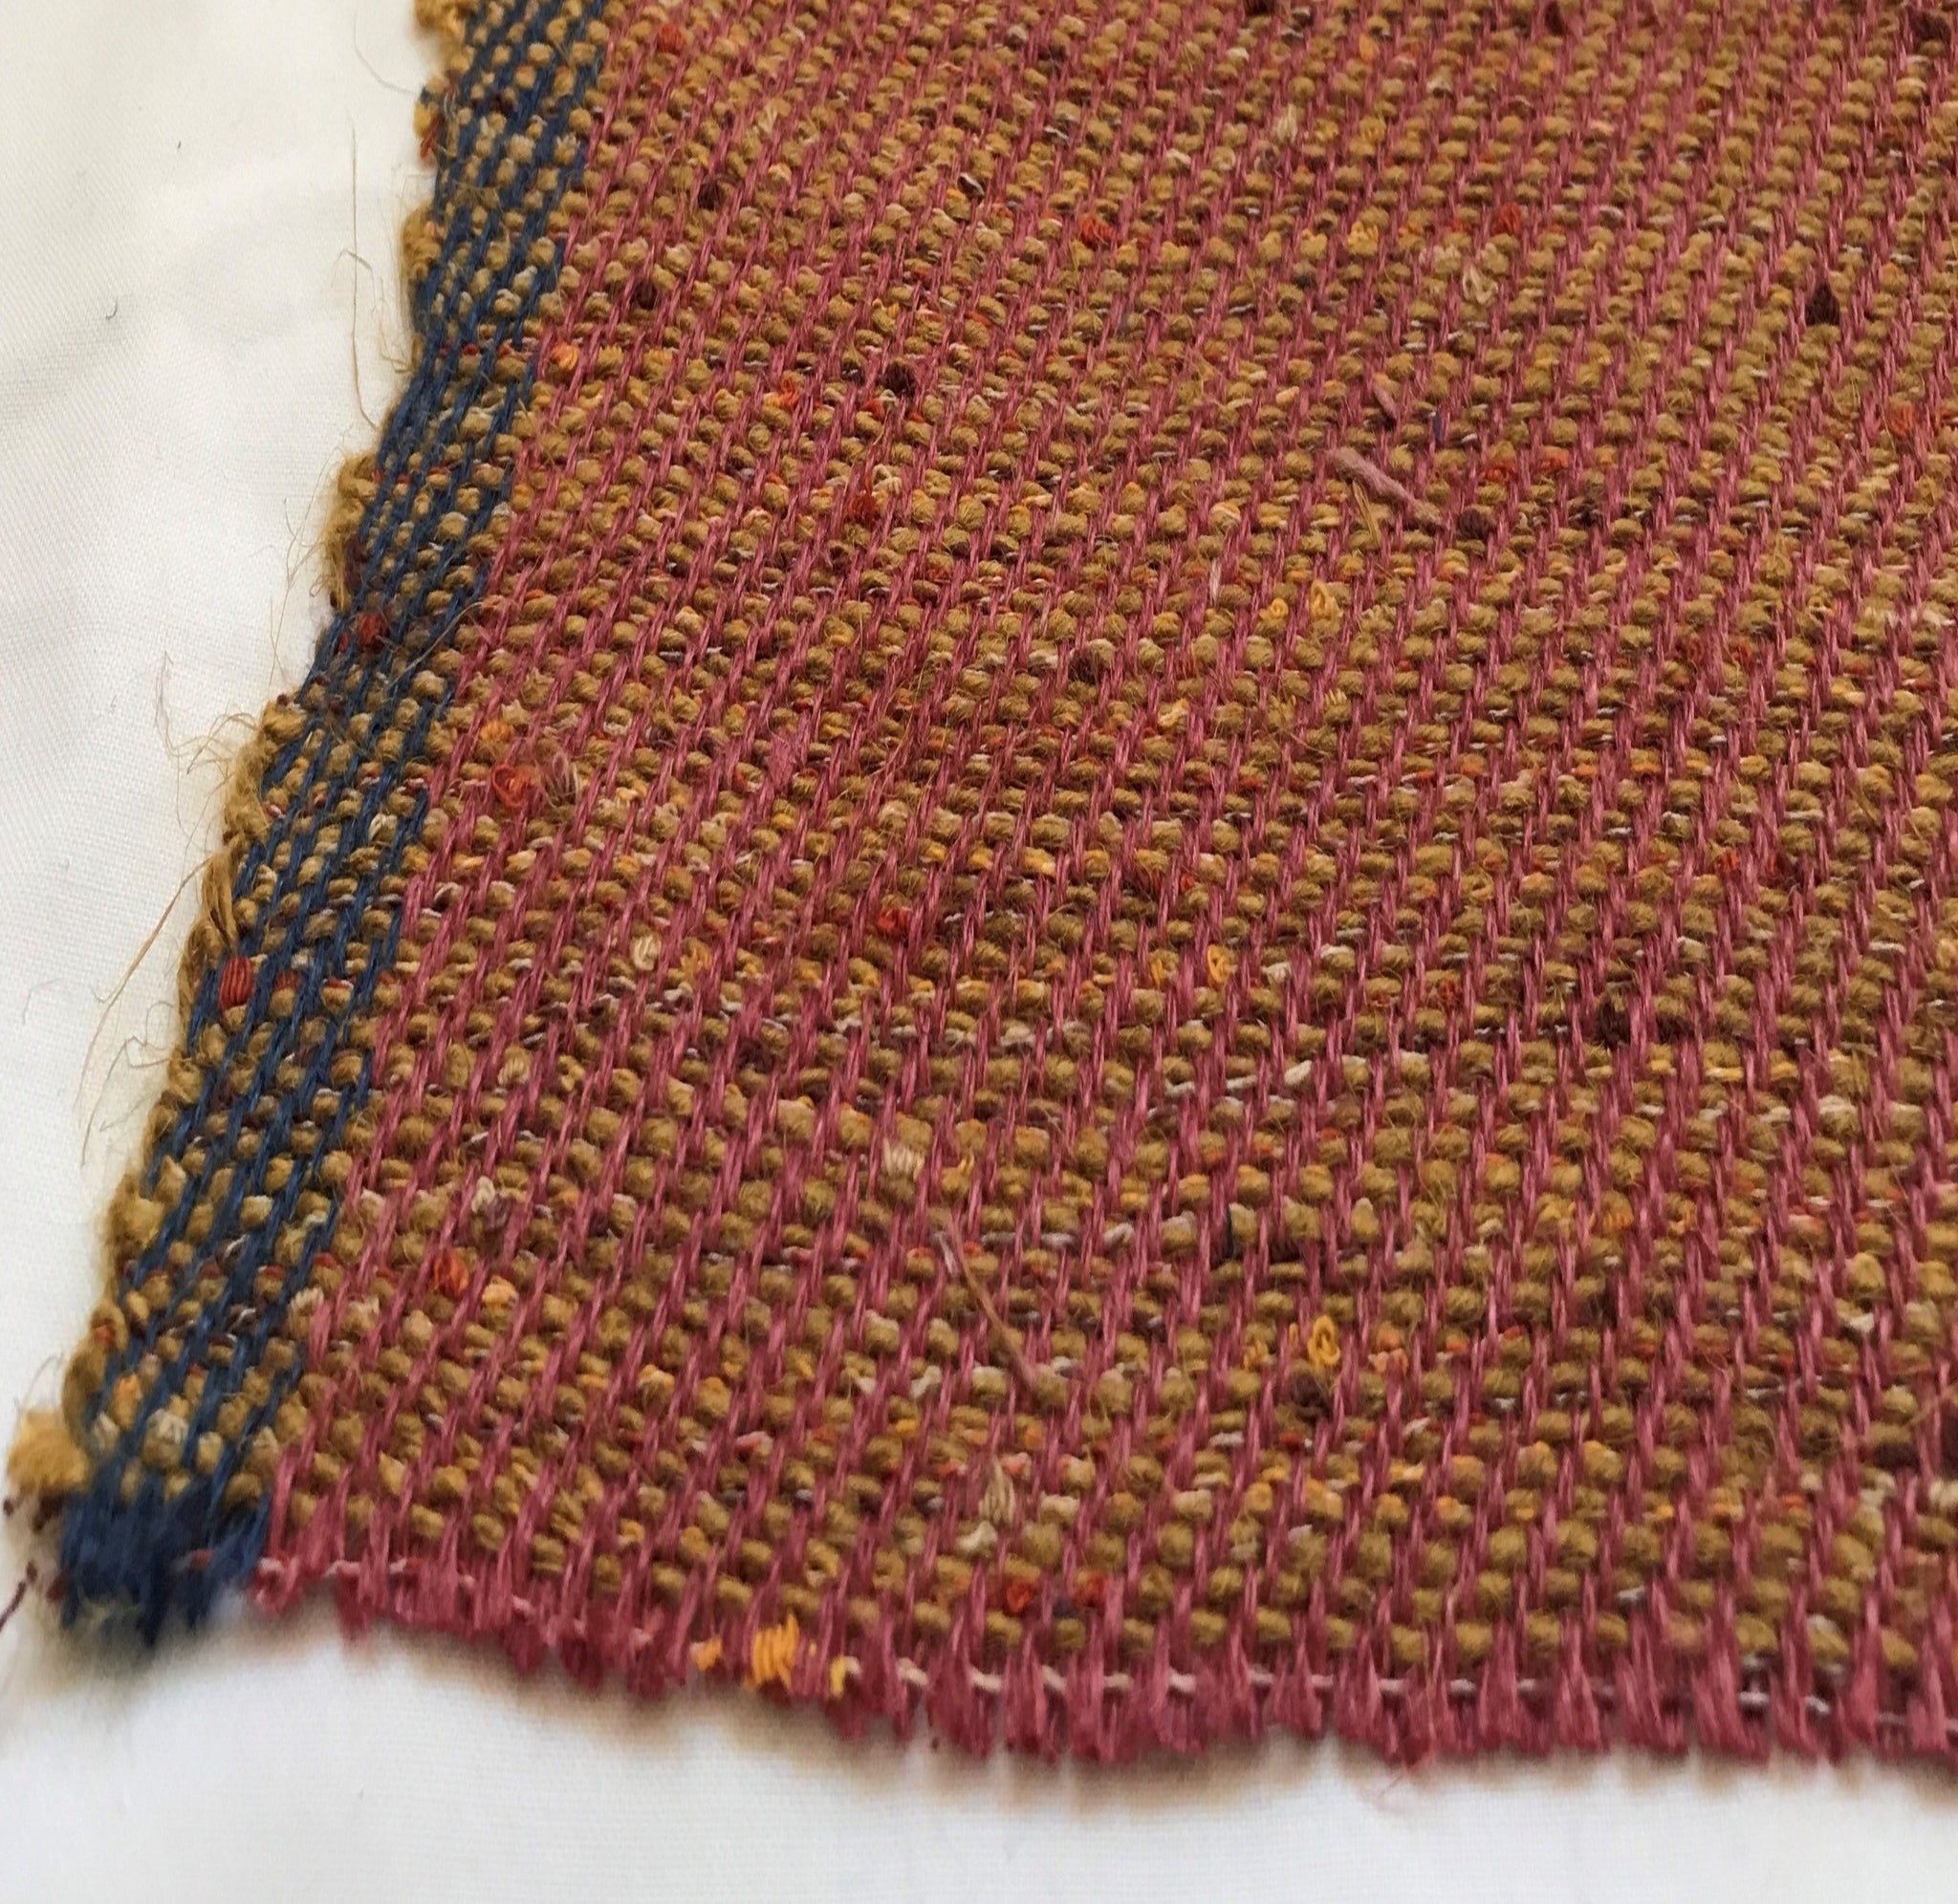 Handwoven Rust Oatmeal diagonal weave